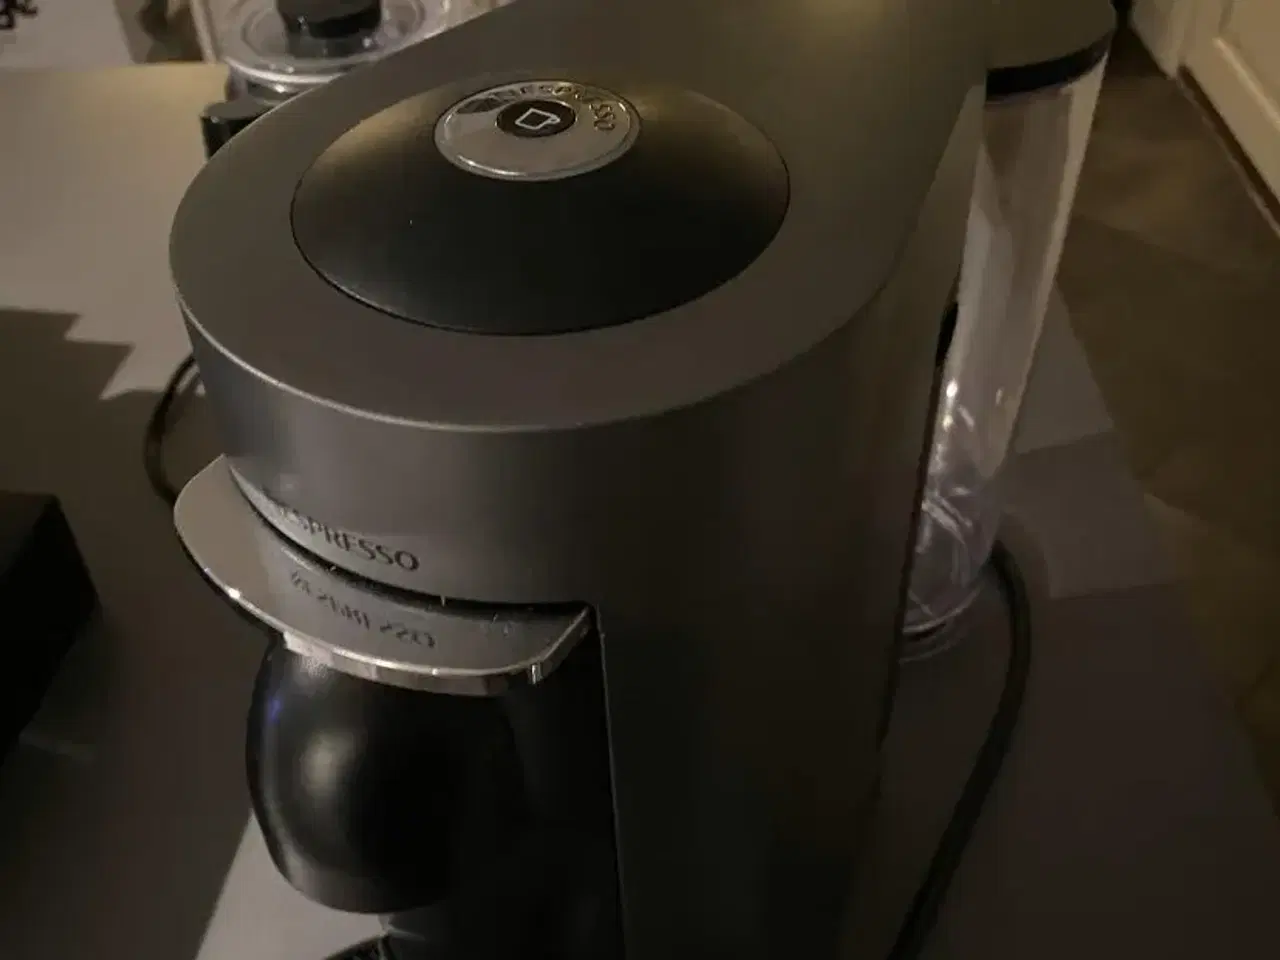 Billede 1 - Nespresso kaffemaskine og mælkeskummer